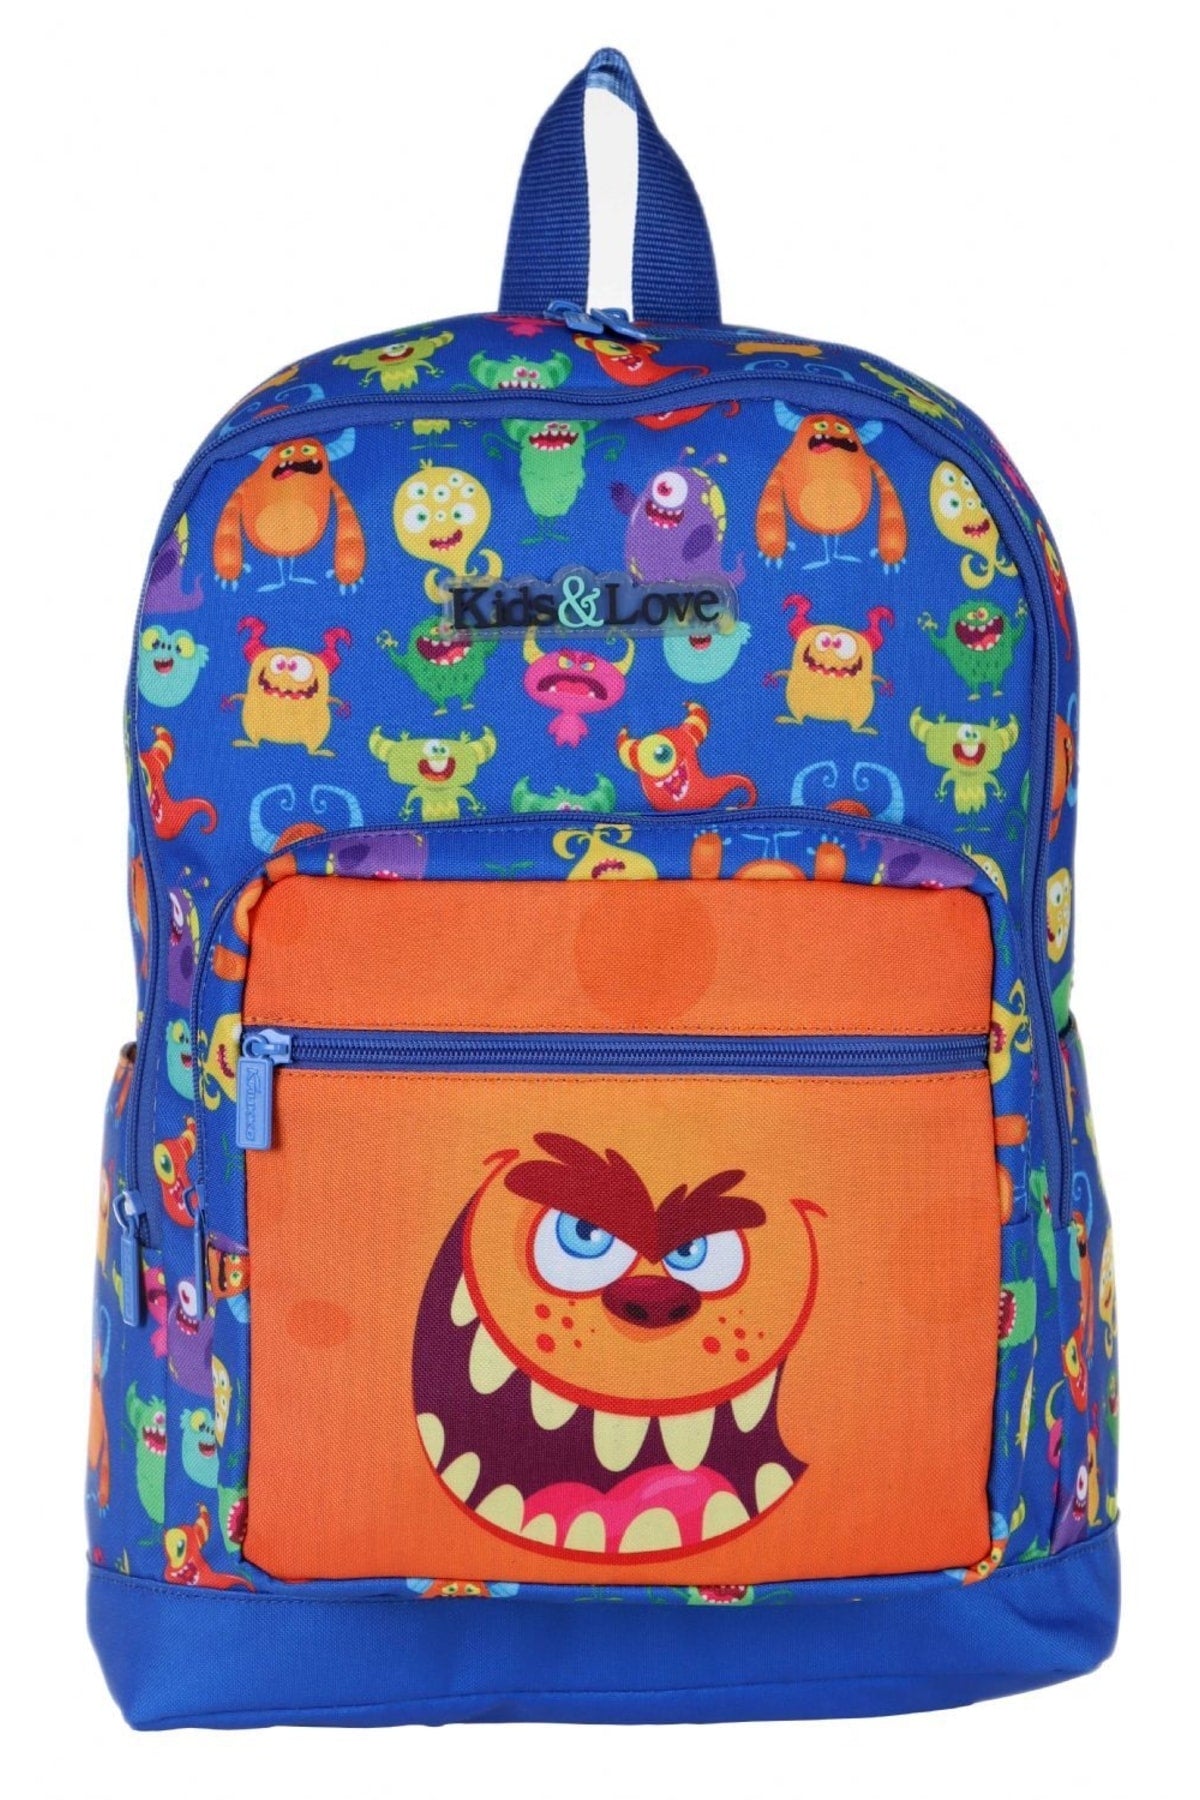 Kids&love Blue Monsters Elementary School Bag Set - Boys